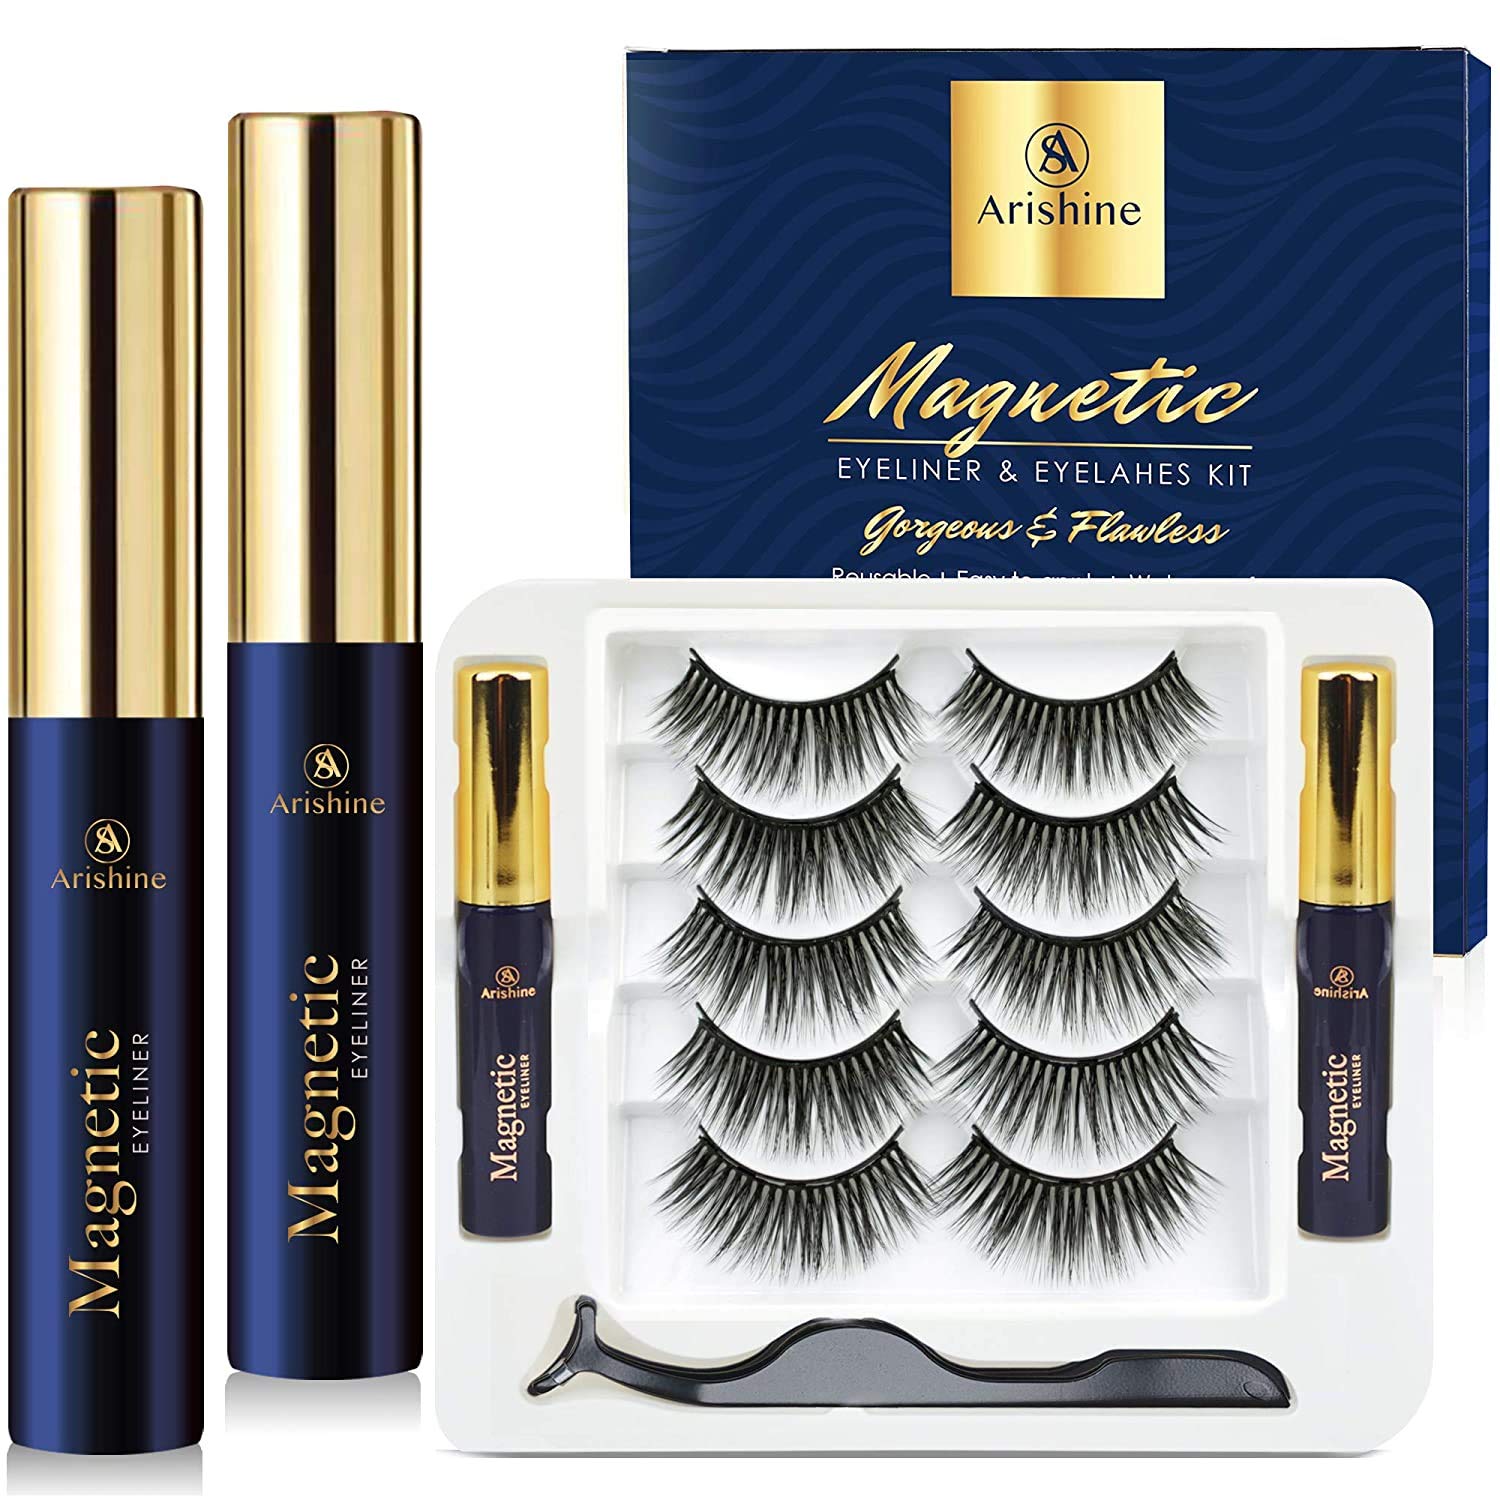 Arishine Magnetic Eyelashes with Eyeliner Luxury Multi-layered Effect Natural Look Faux Mink Lashes for Girls | 5 Pair